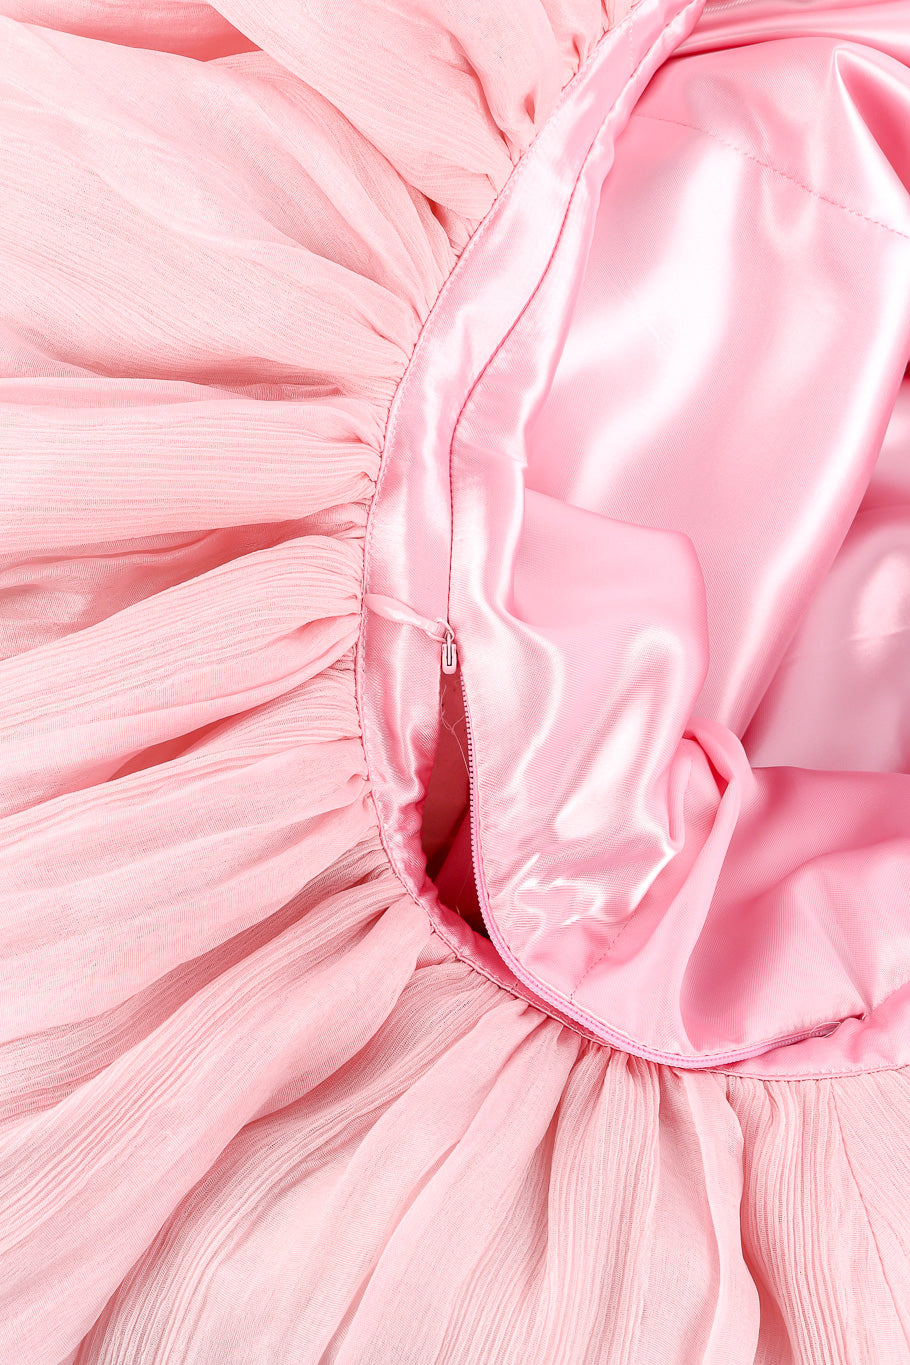 Bubble dress by Margaretha Ley for Escada inside zipper close @recessla